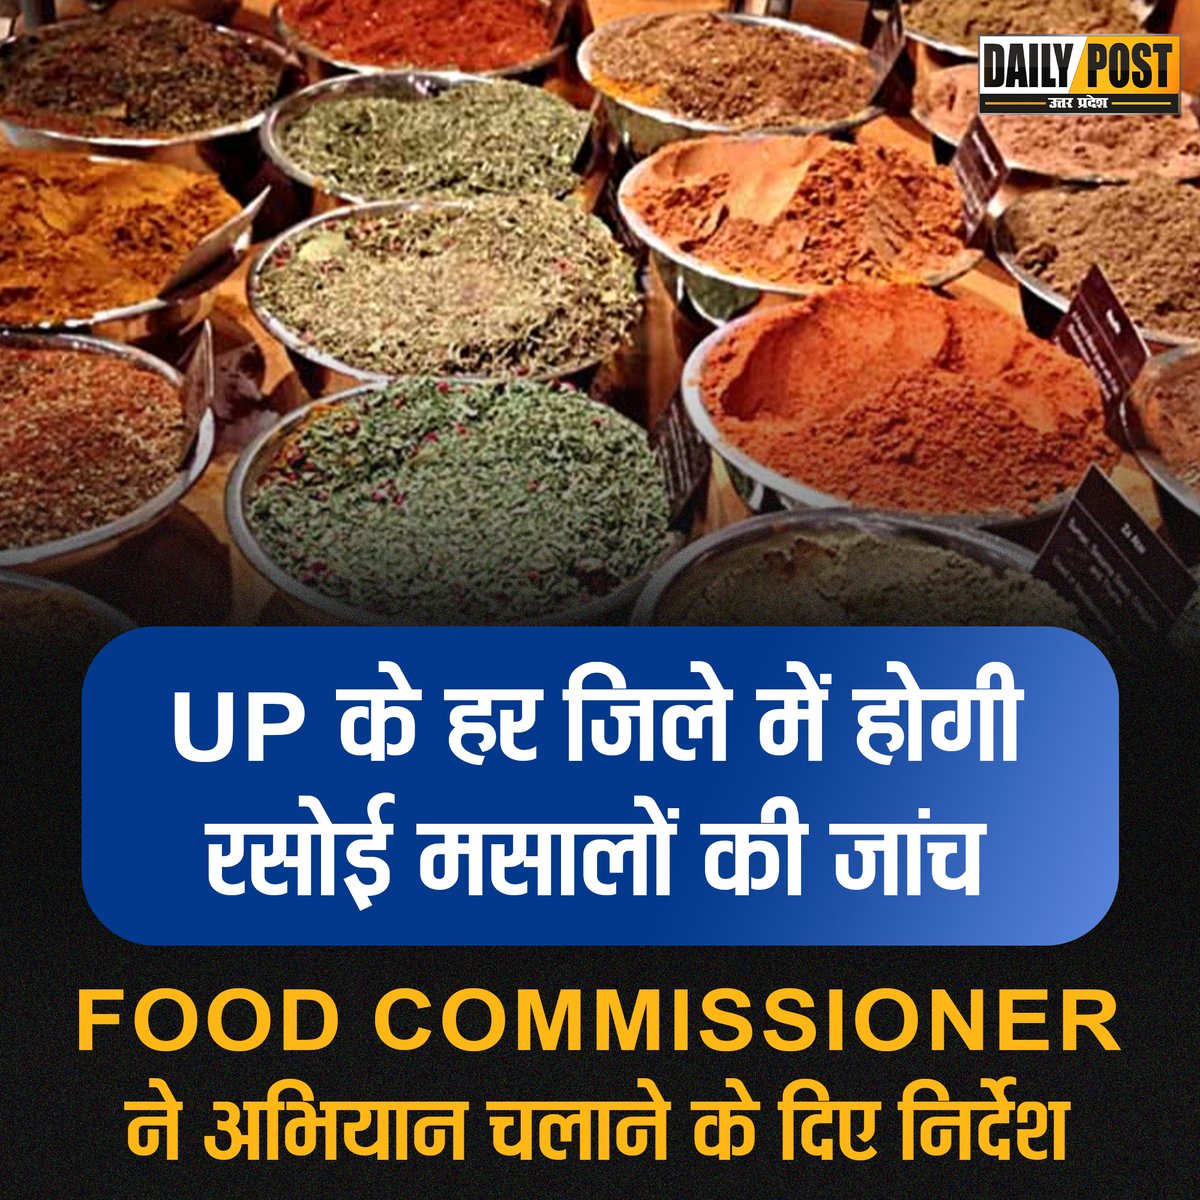 UP के हर जिले में होगी रसोई मसालों की जांच
Food Commissioner ने अभियान चलाने के दिए निर्देश
.
.
.
#FoodCommissioner #foodsafety #masale #raid #foodandsafety #uttarpradesh #dailypostup